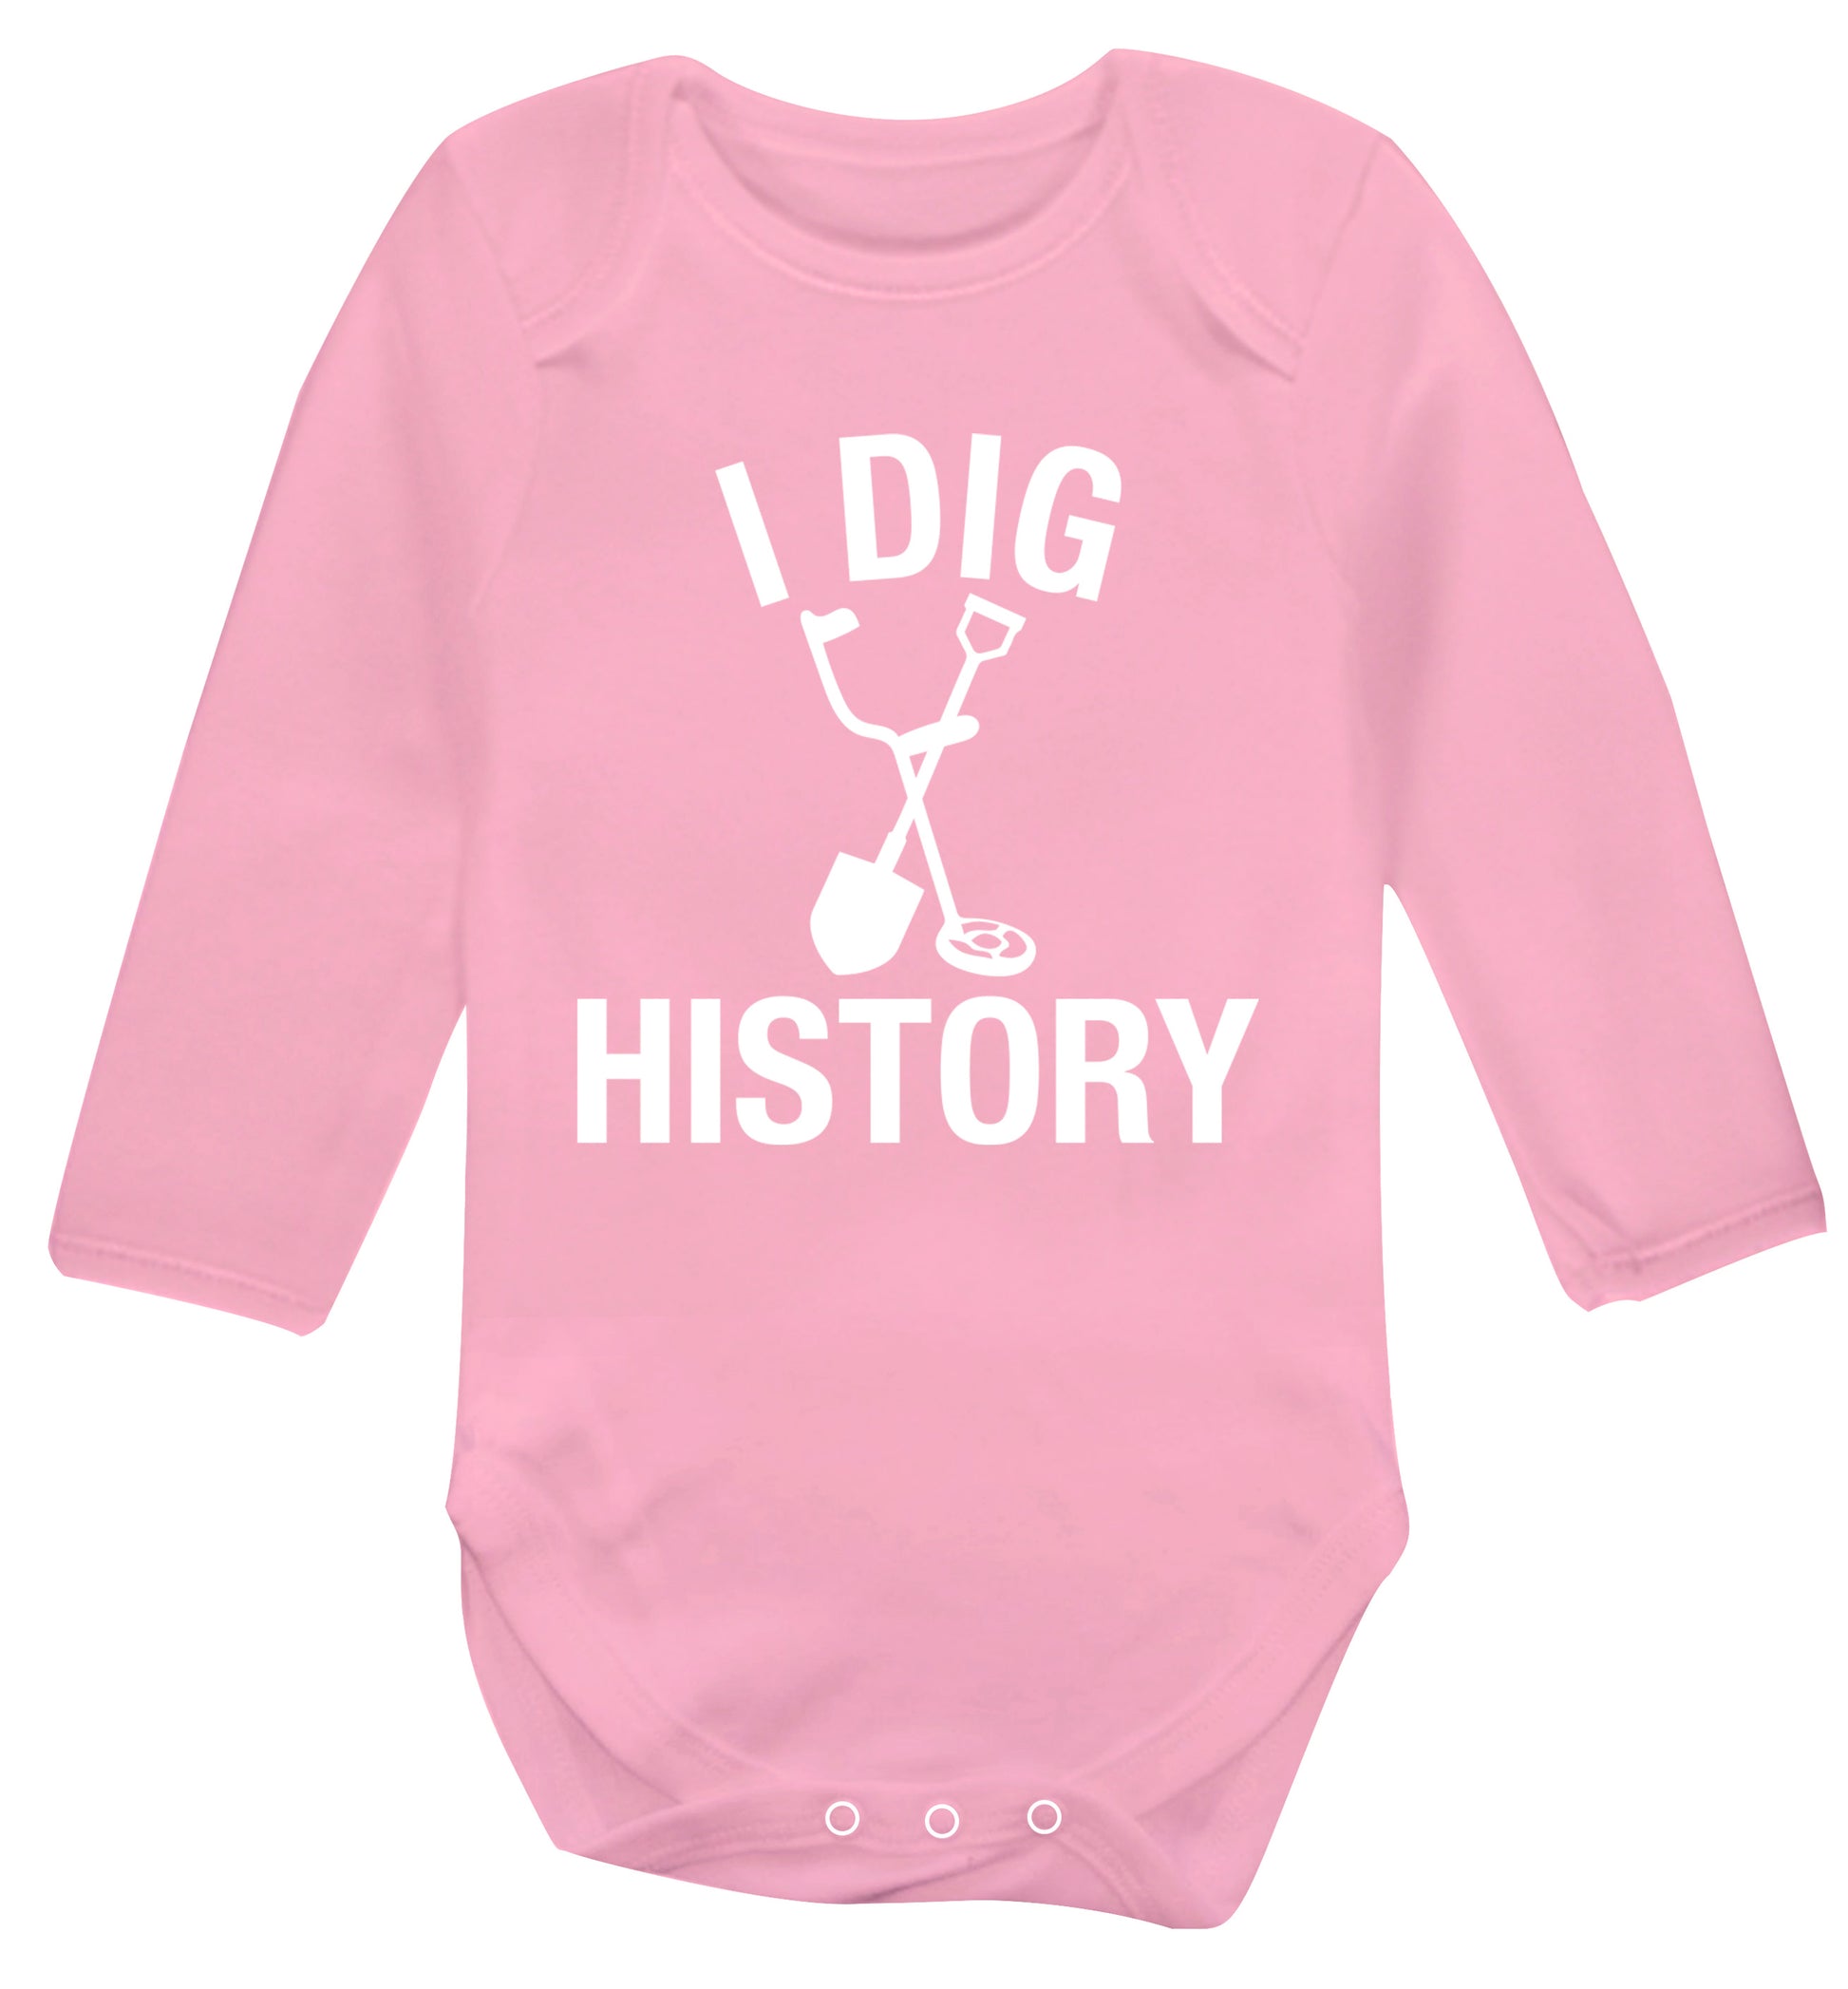 I dig history Baby Vest long sleeved pale pink 6-12 months